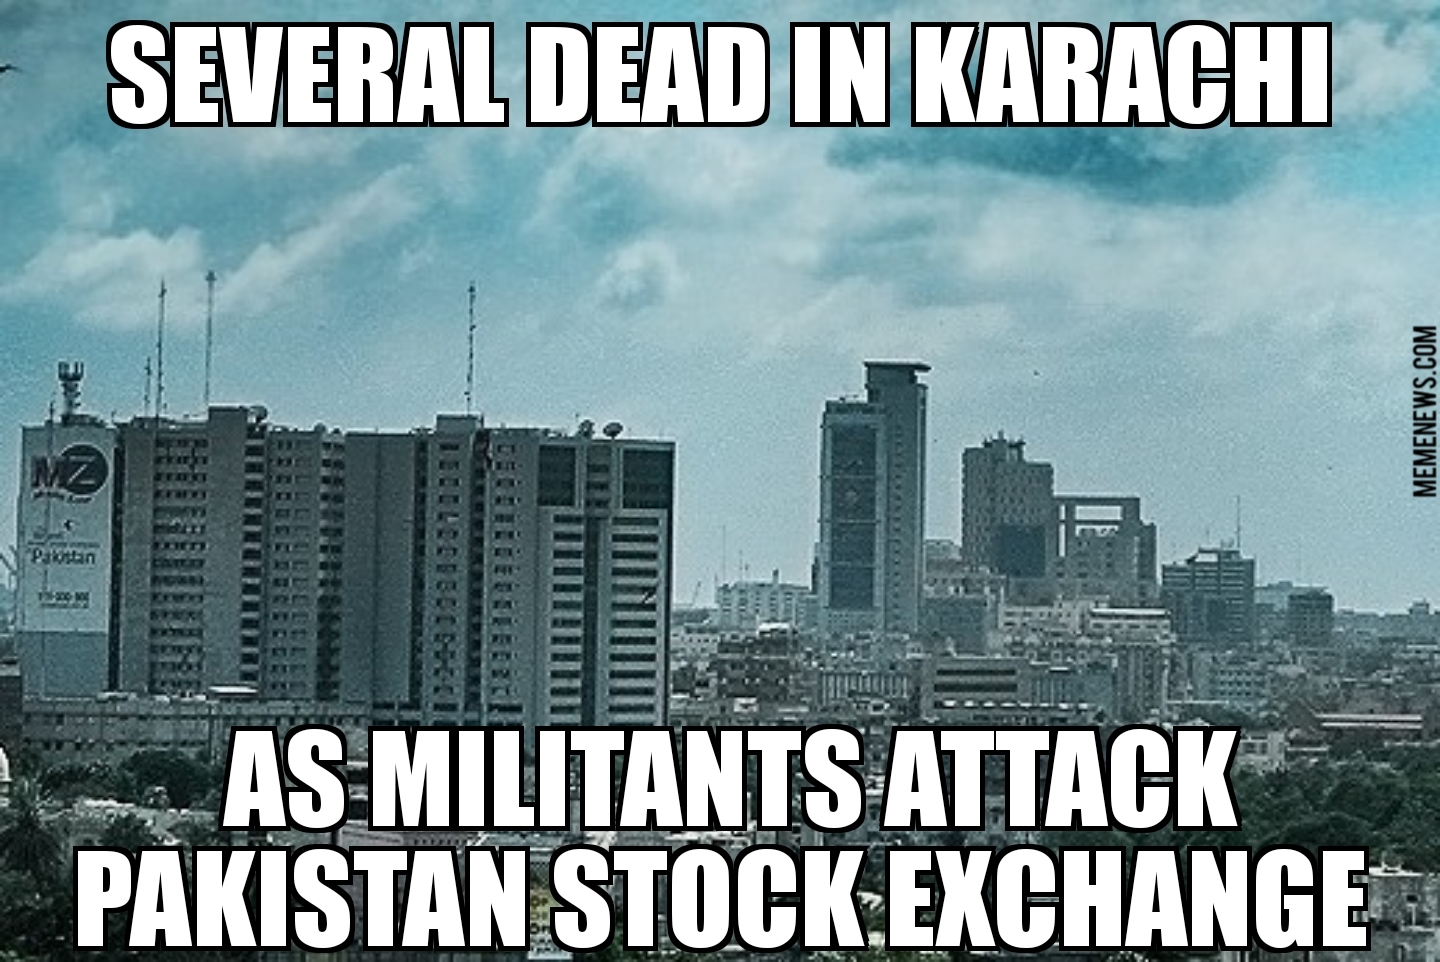 Pakistan Stock Exchange attack